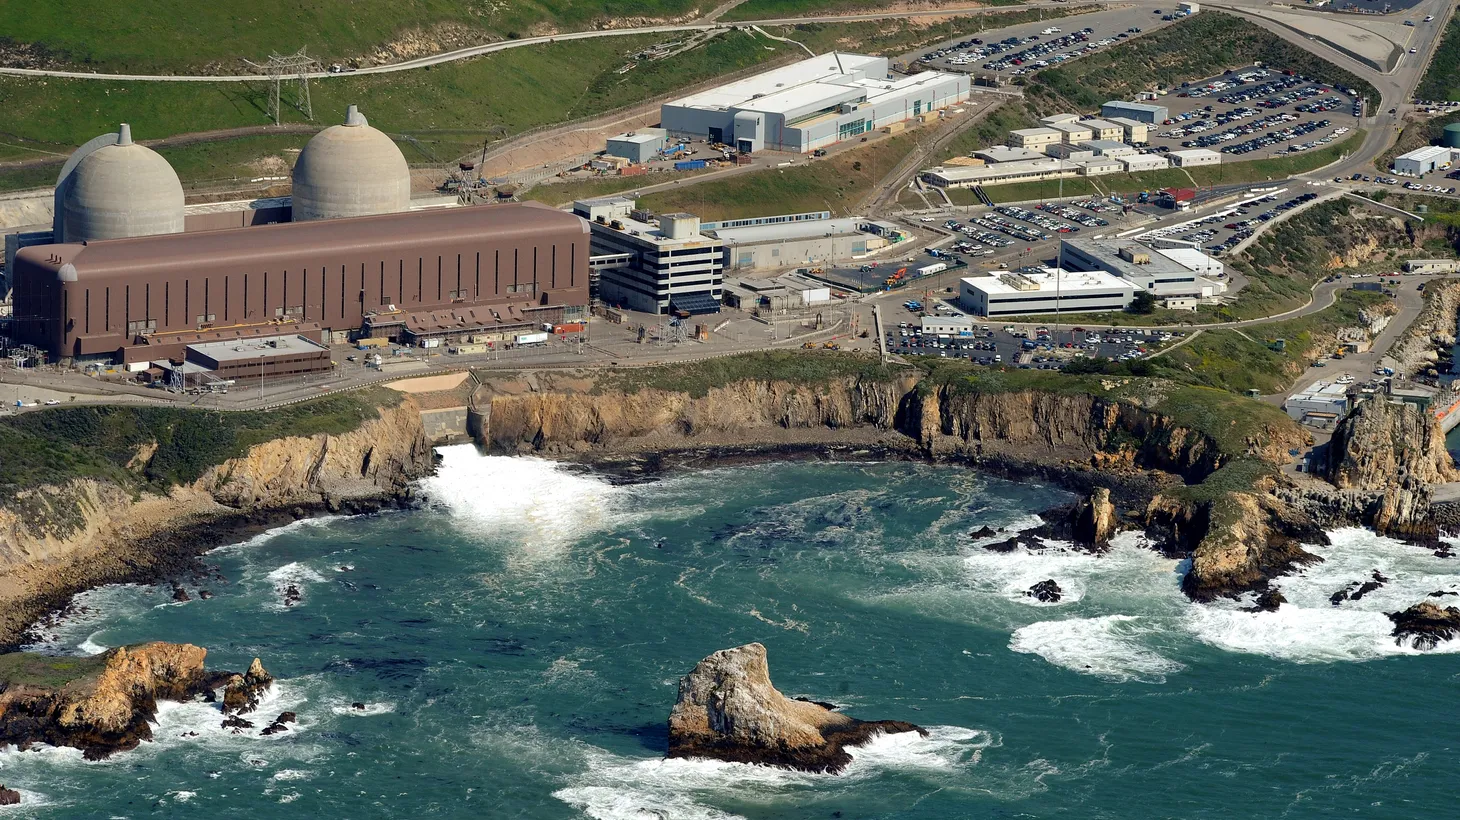 An aerial view shows the Diablo Canyon Nuclear Power Plant near San Luis Obispo, California, on March 17, 2011.